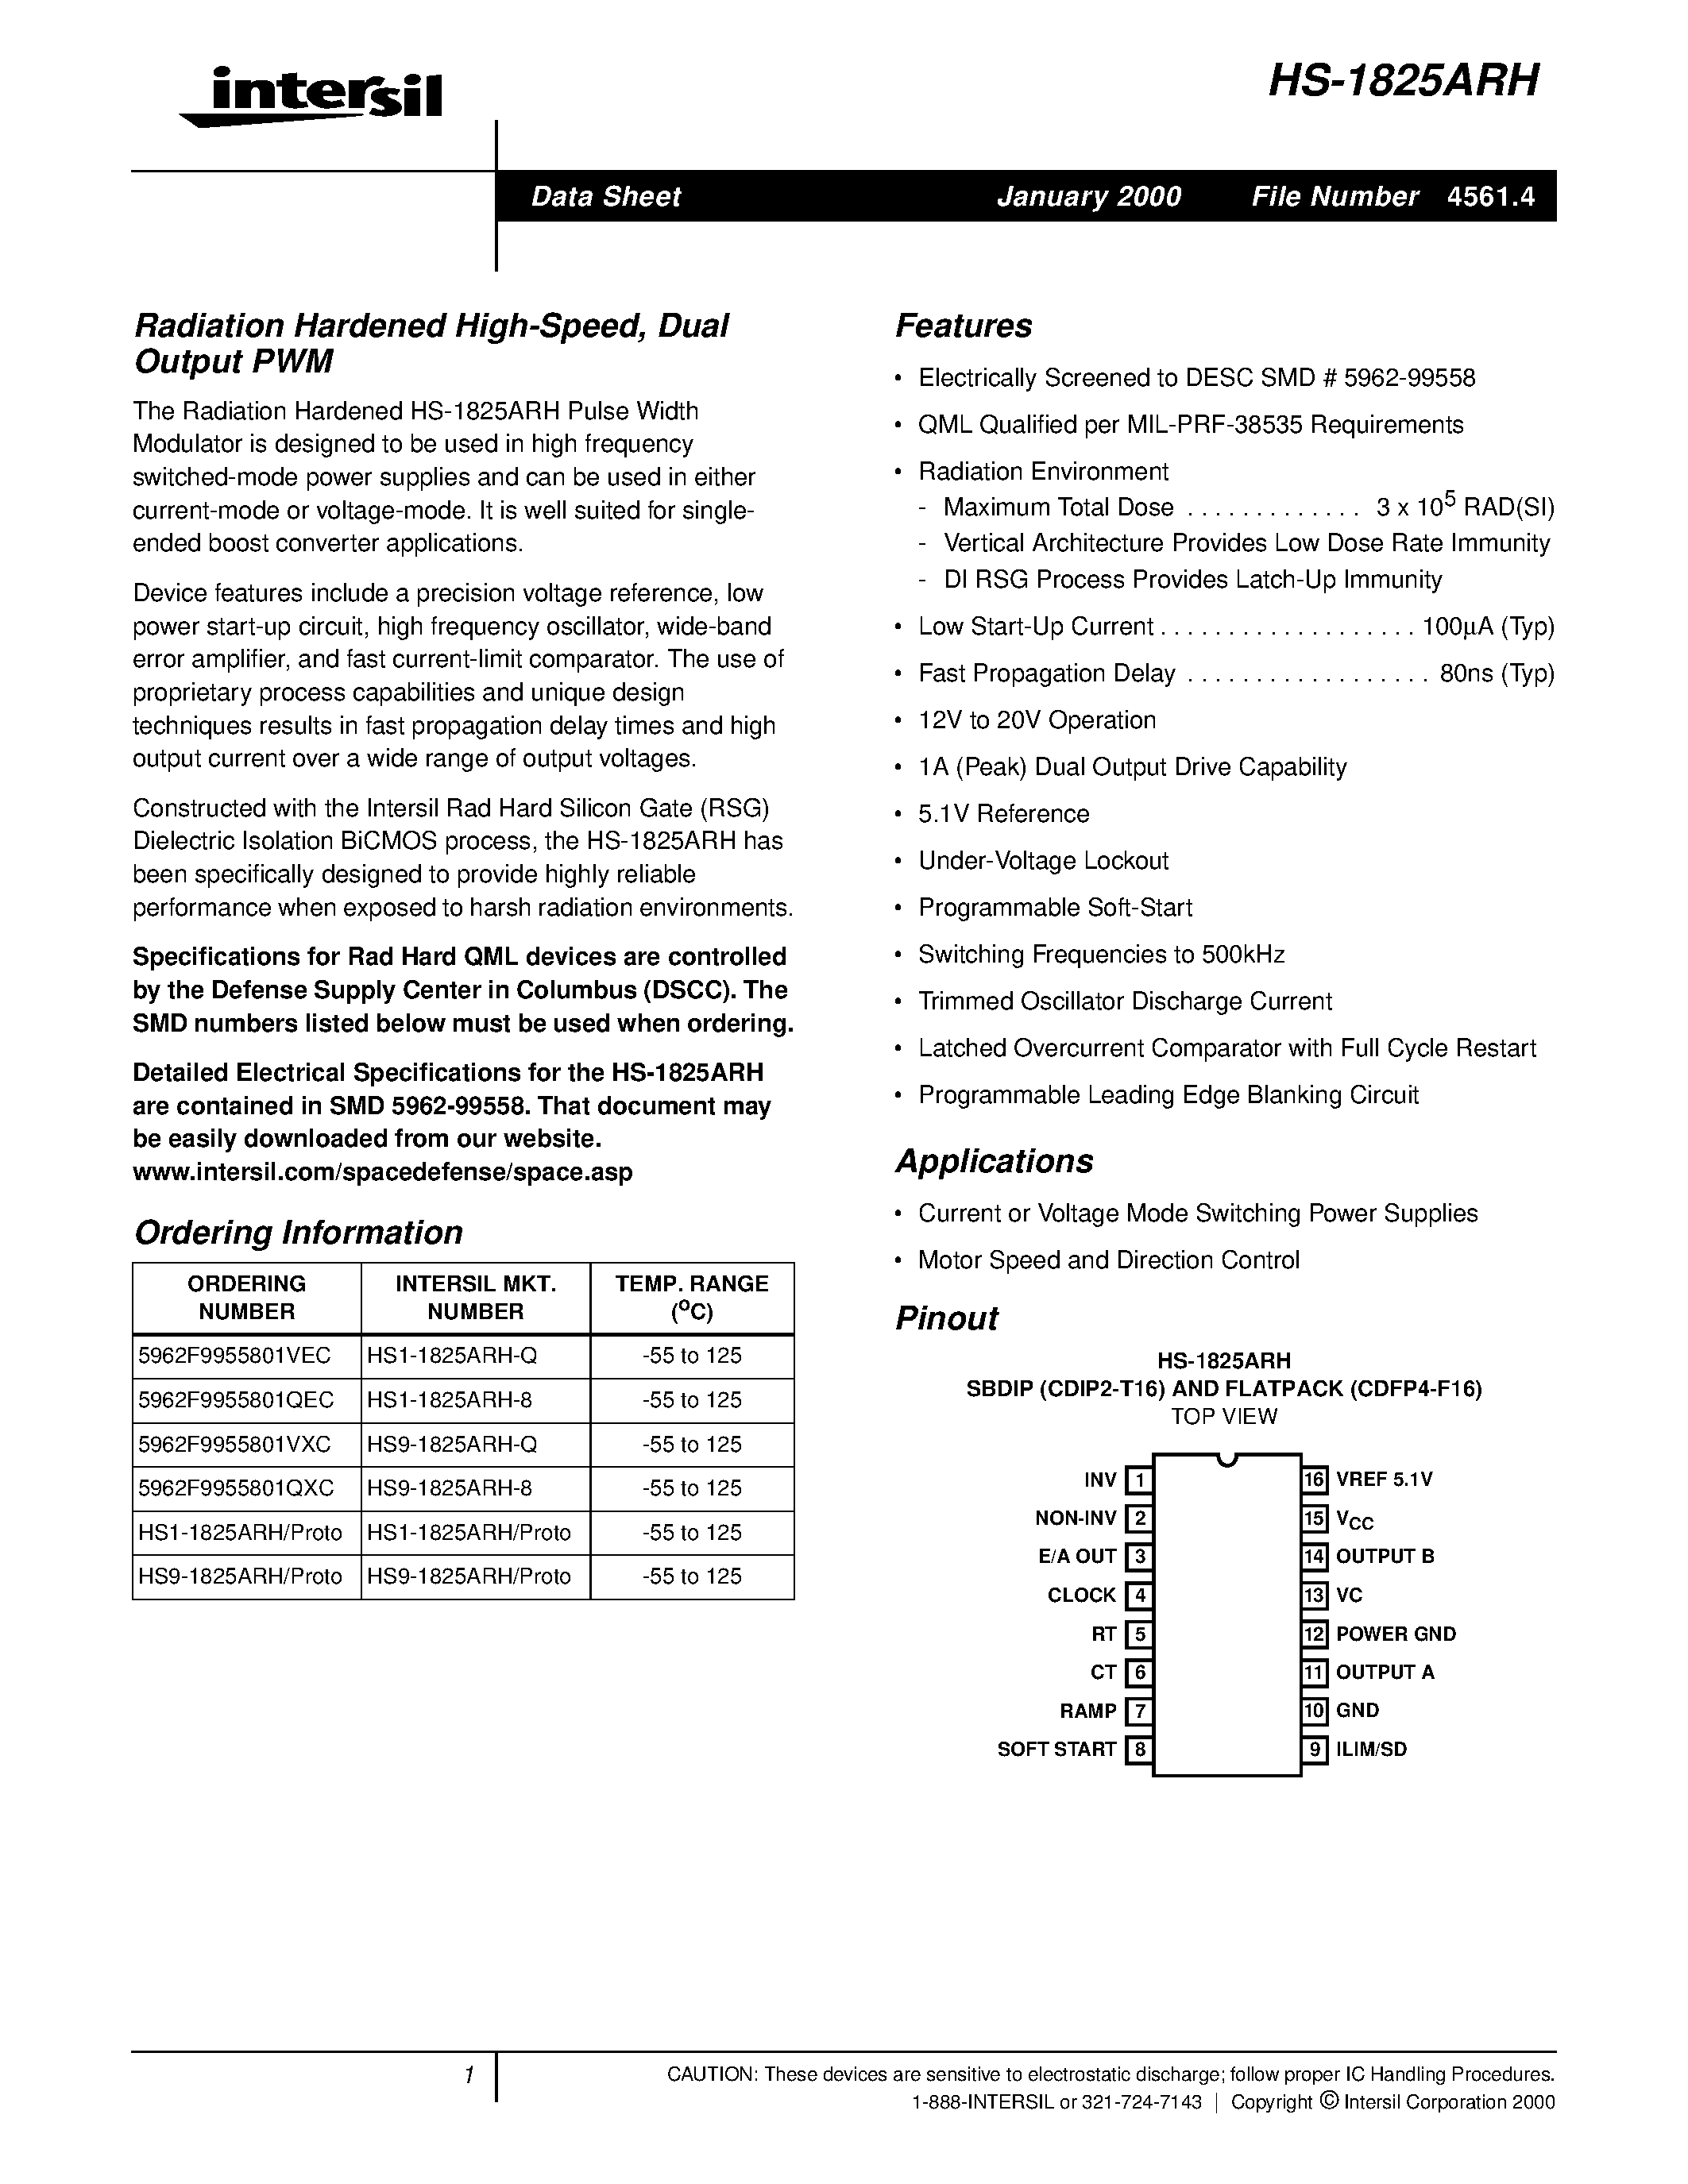 Даташит HS9-1825ARH-Q - Radiation Hardened High-Speed/ Dual Output PWM страница 1